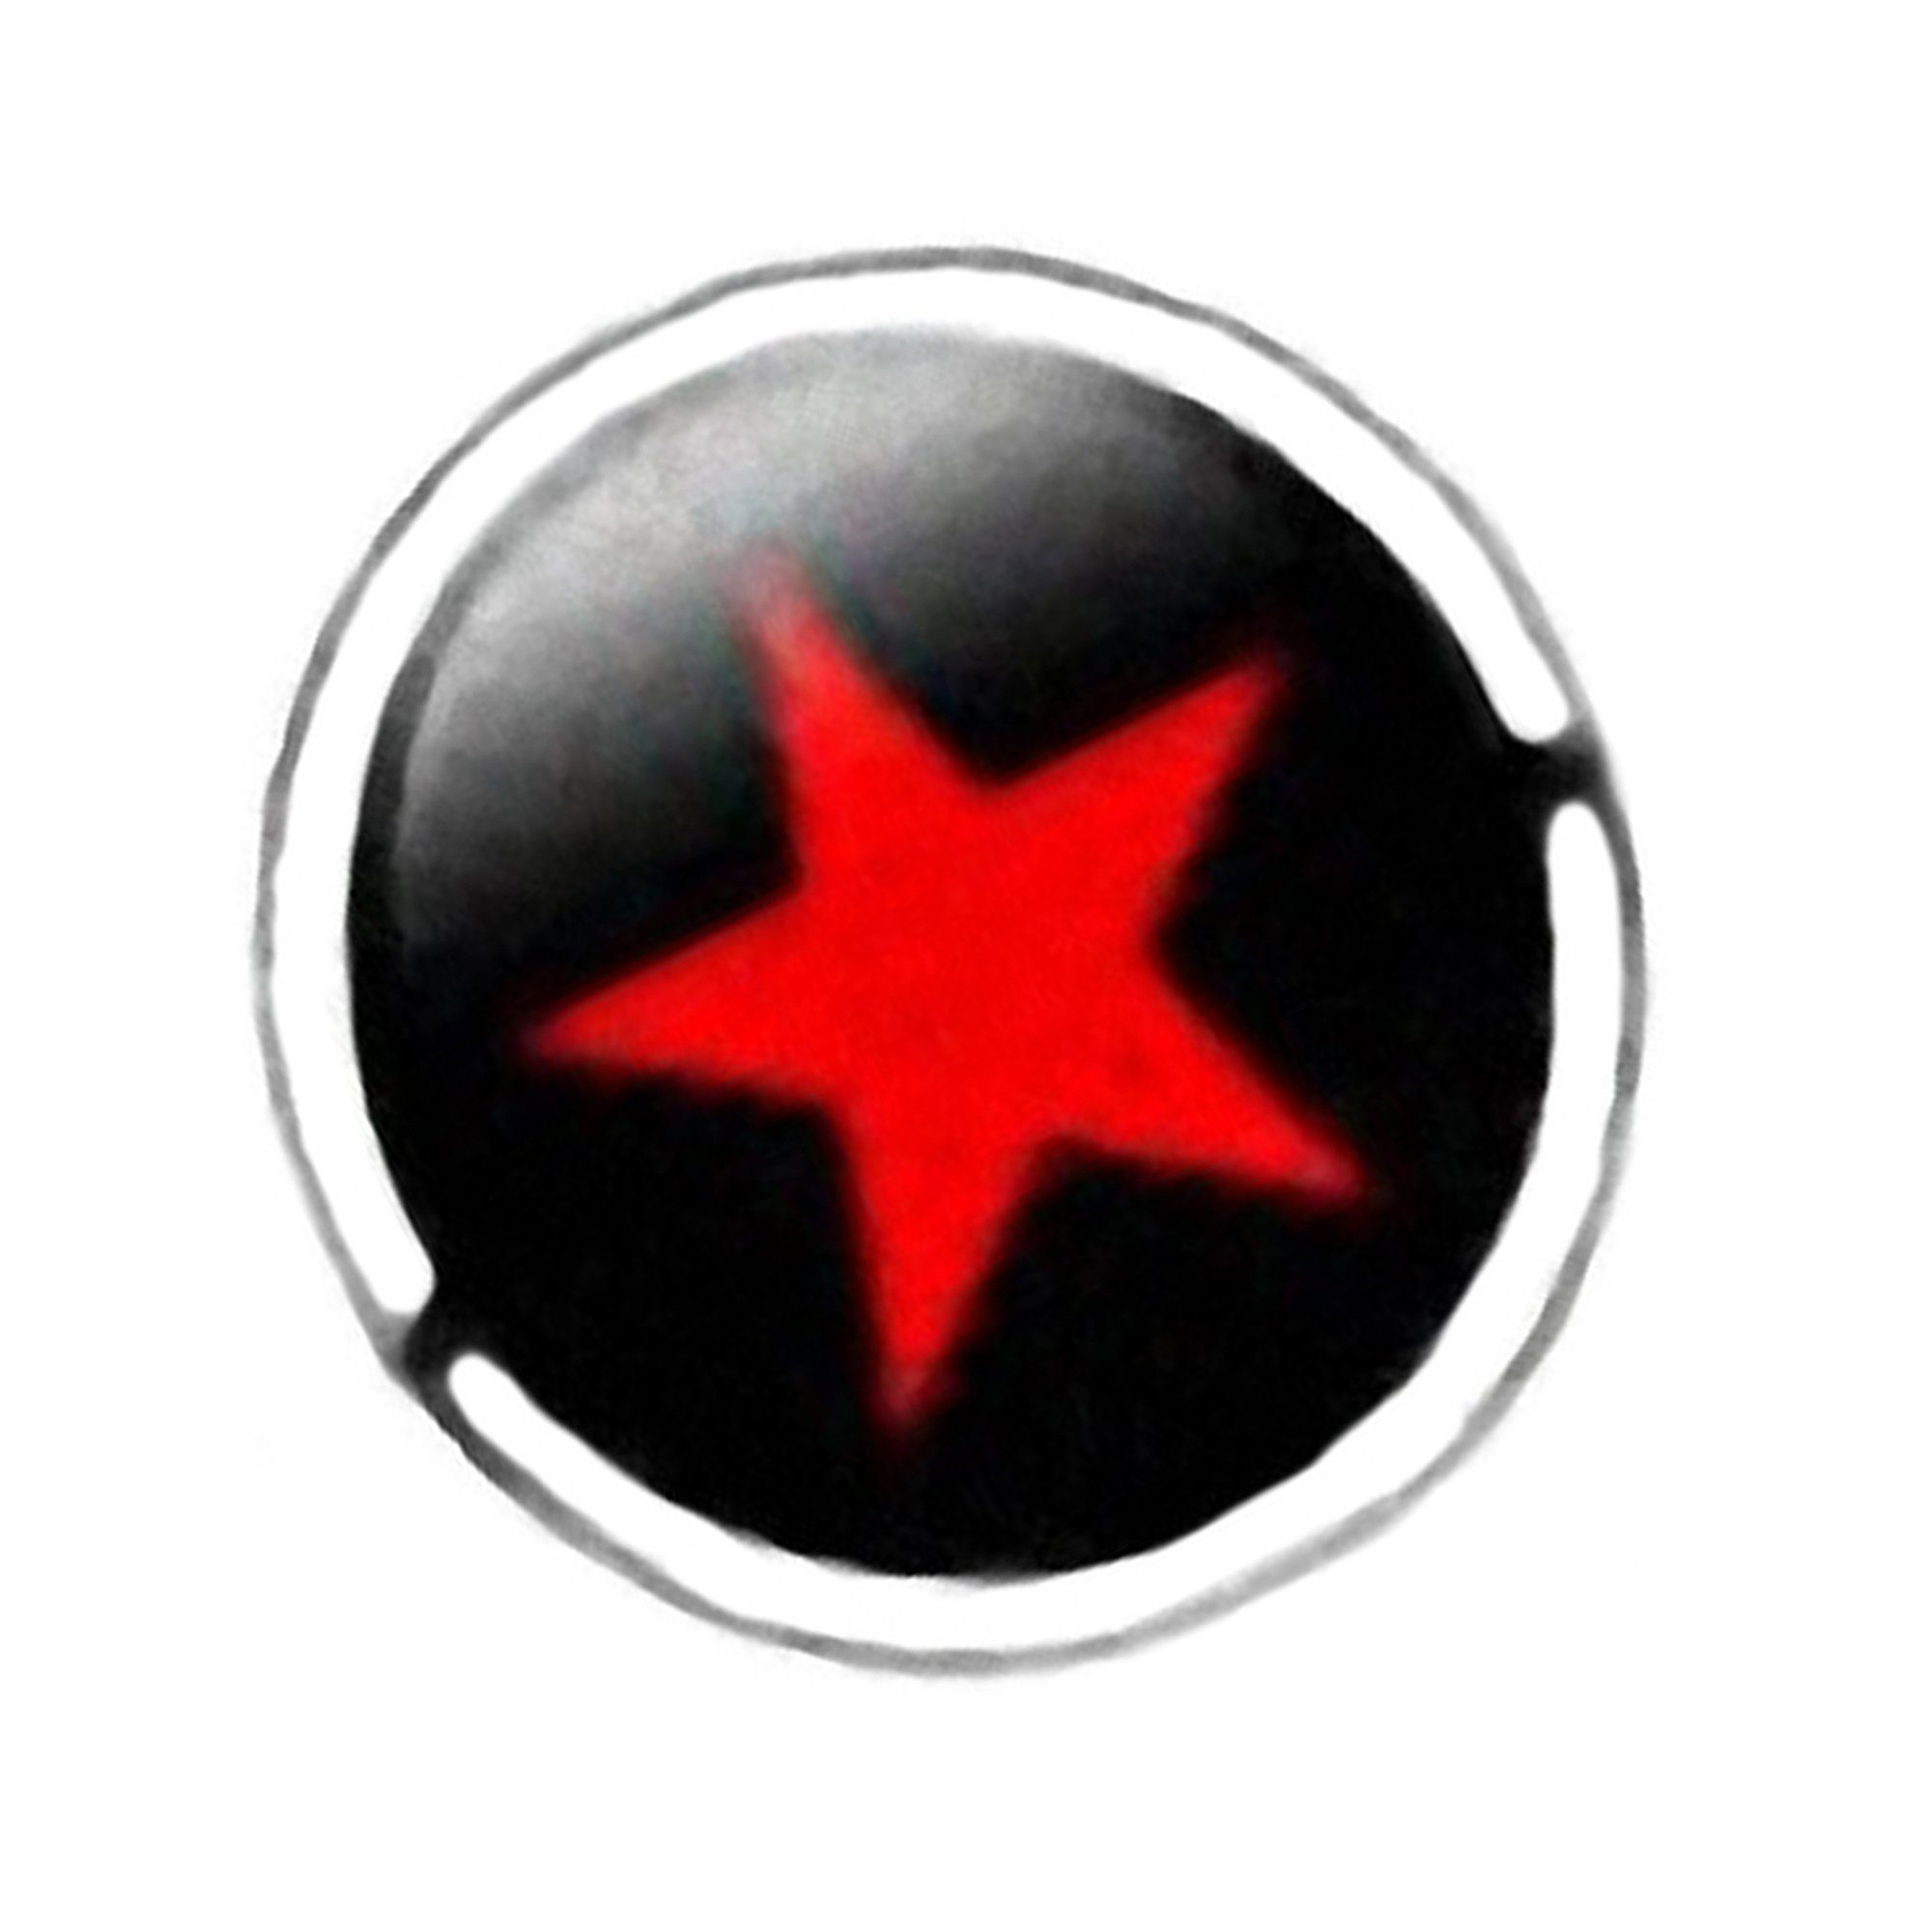 Taffstyle Piercing-Implantat Dermal Piercing Aufsatz Kugel Comic Logo Red Star, Anchor Skin Diver Anker Aufsatz Kugel Aufsatzkugel Ball Flach Stecker